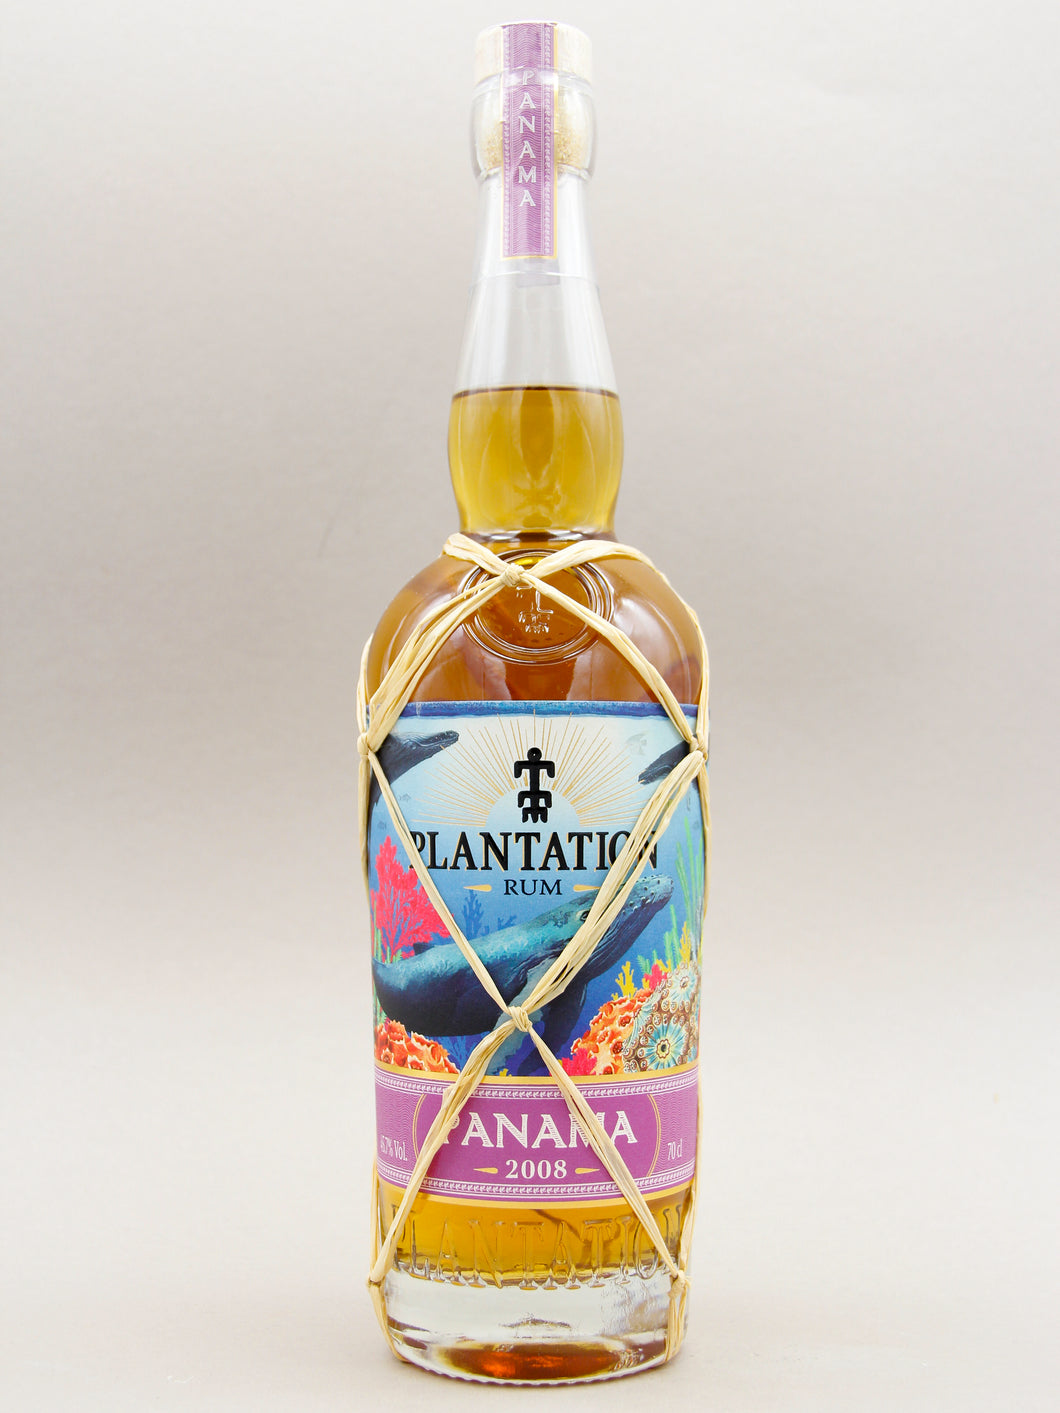 Plantation Panama Rum, Vintage Edition 2008, 13 years (45.7%, 70cl)